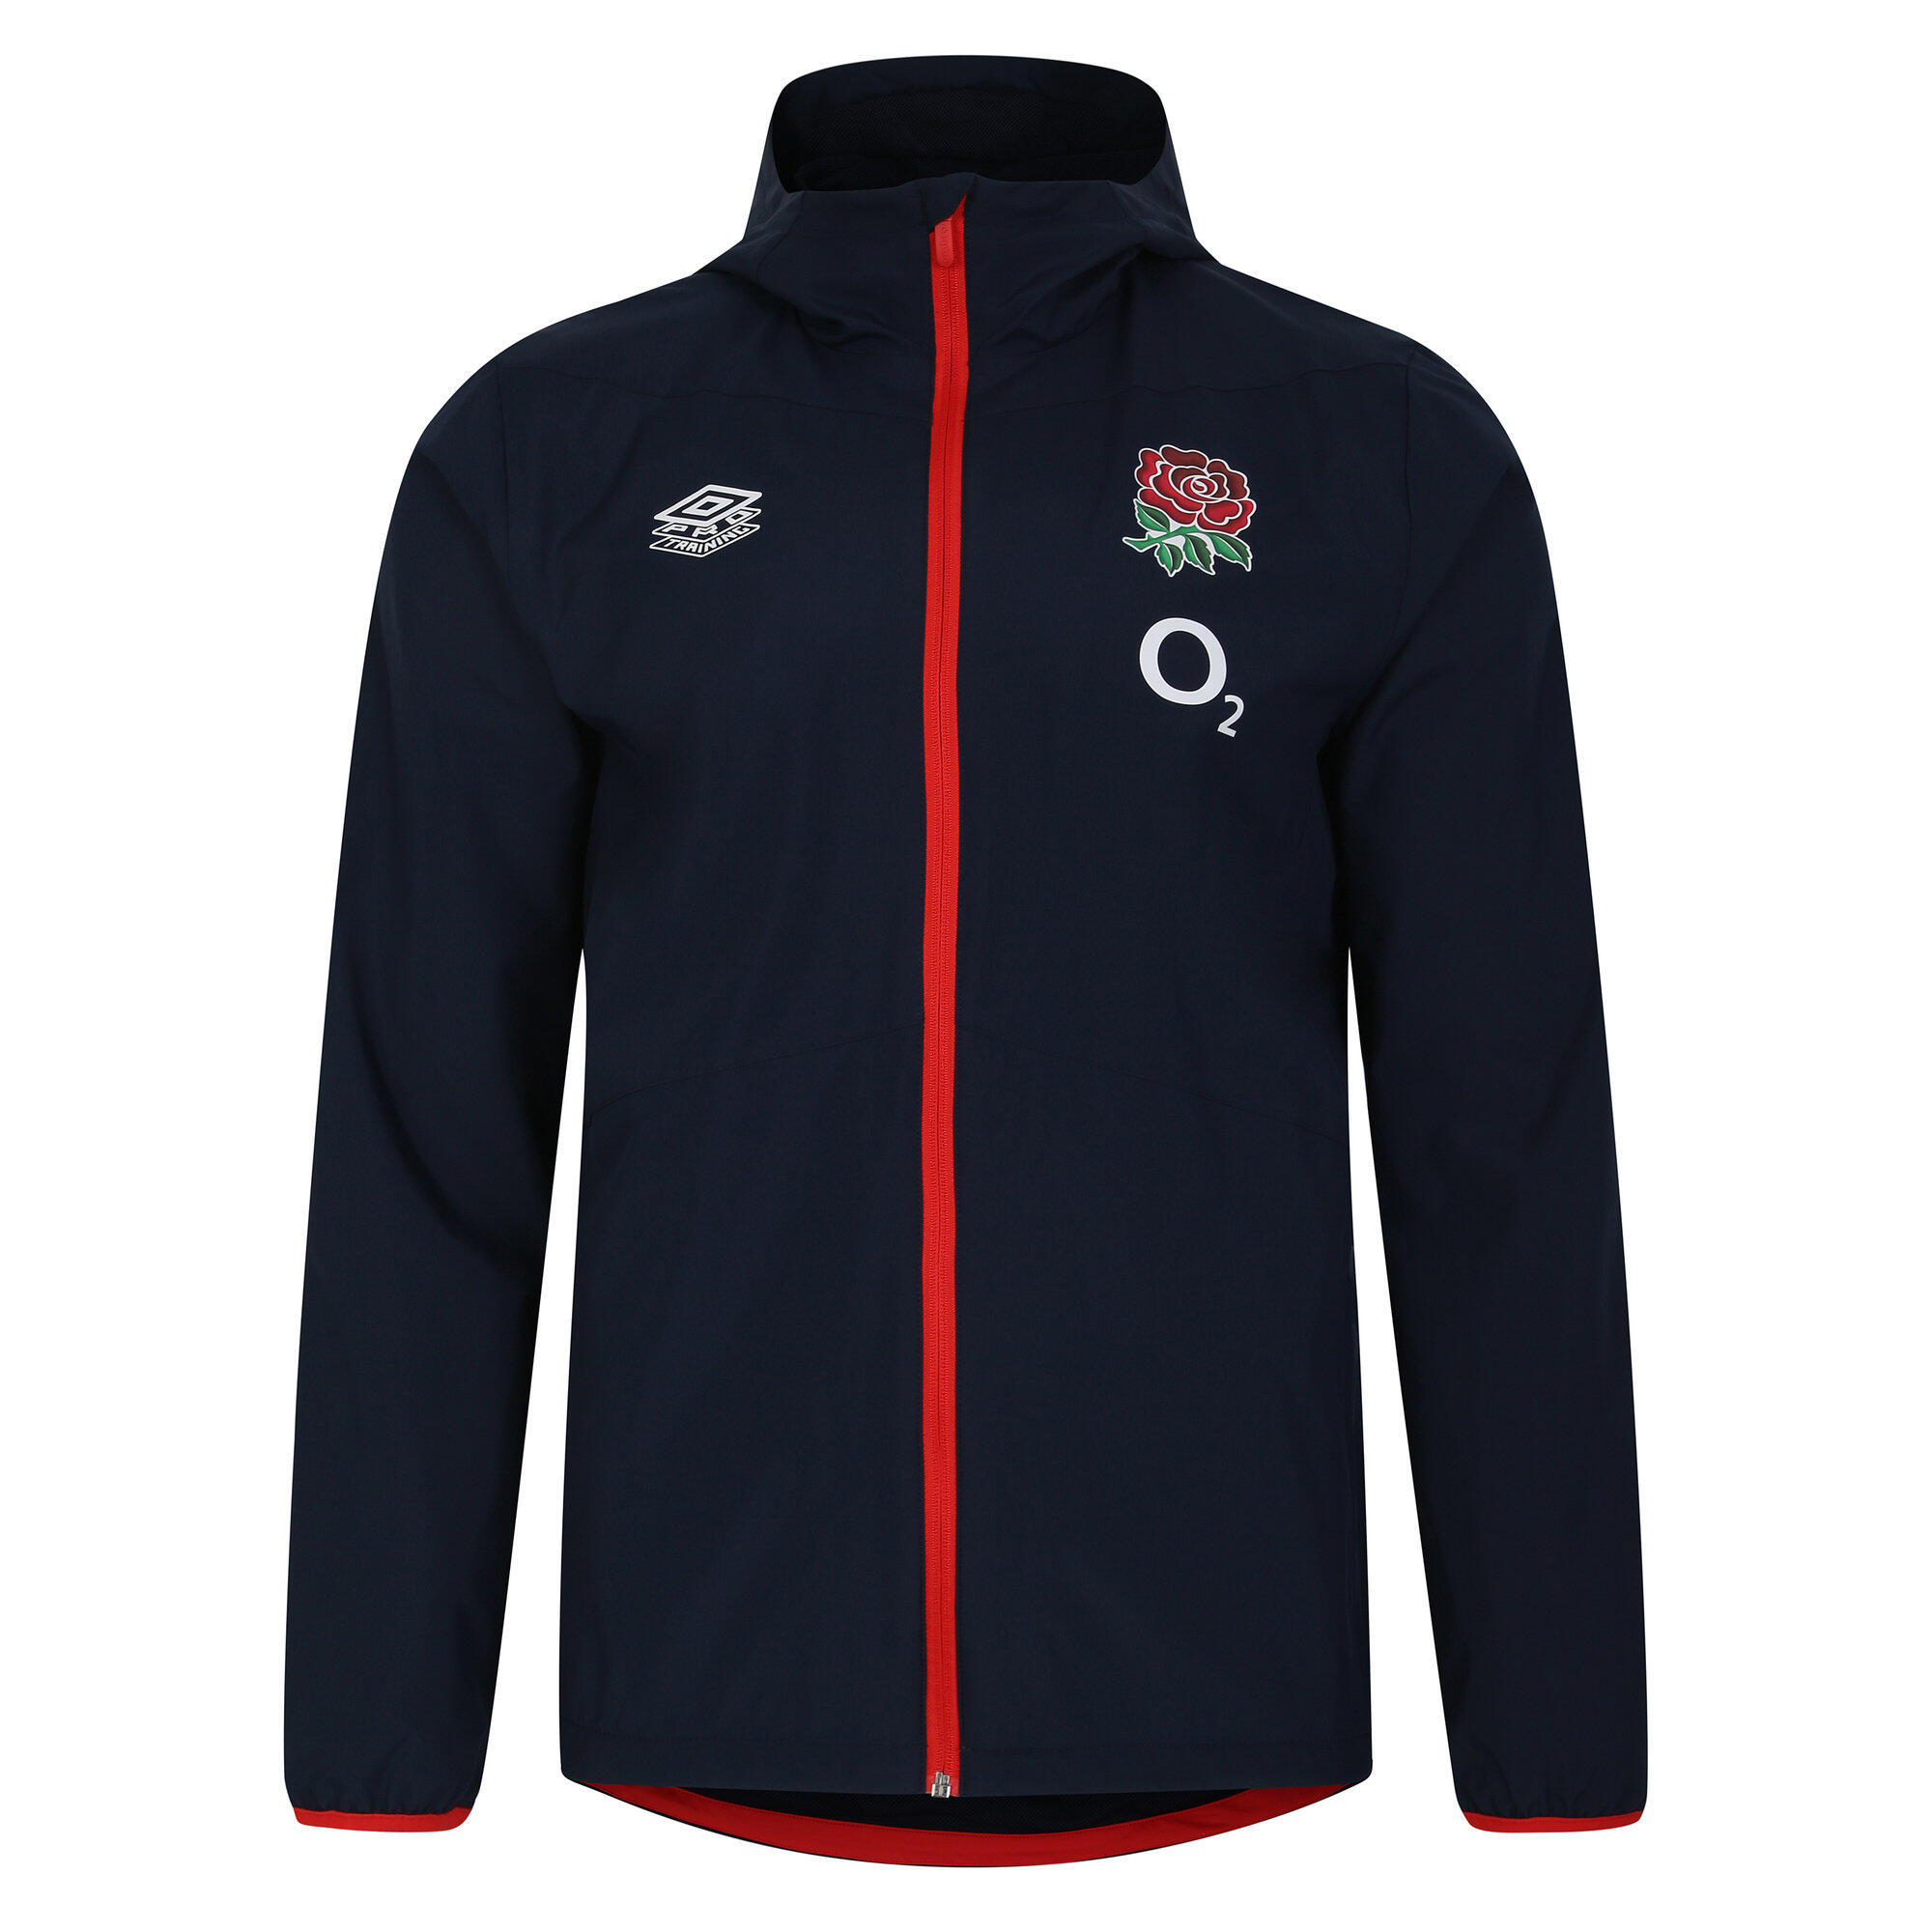 Mens 23/24 England Rugby Track Jacket (Navy Blazer/Flame Scarlet) 1/4